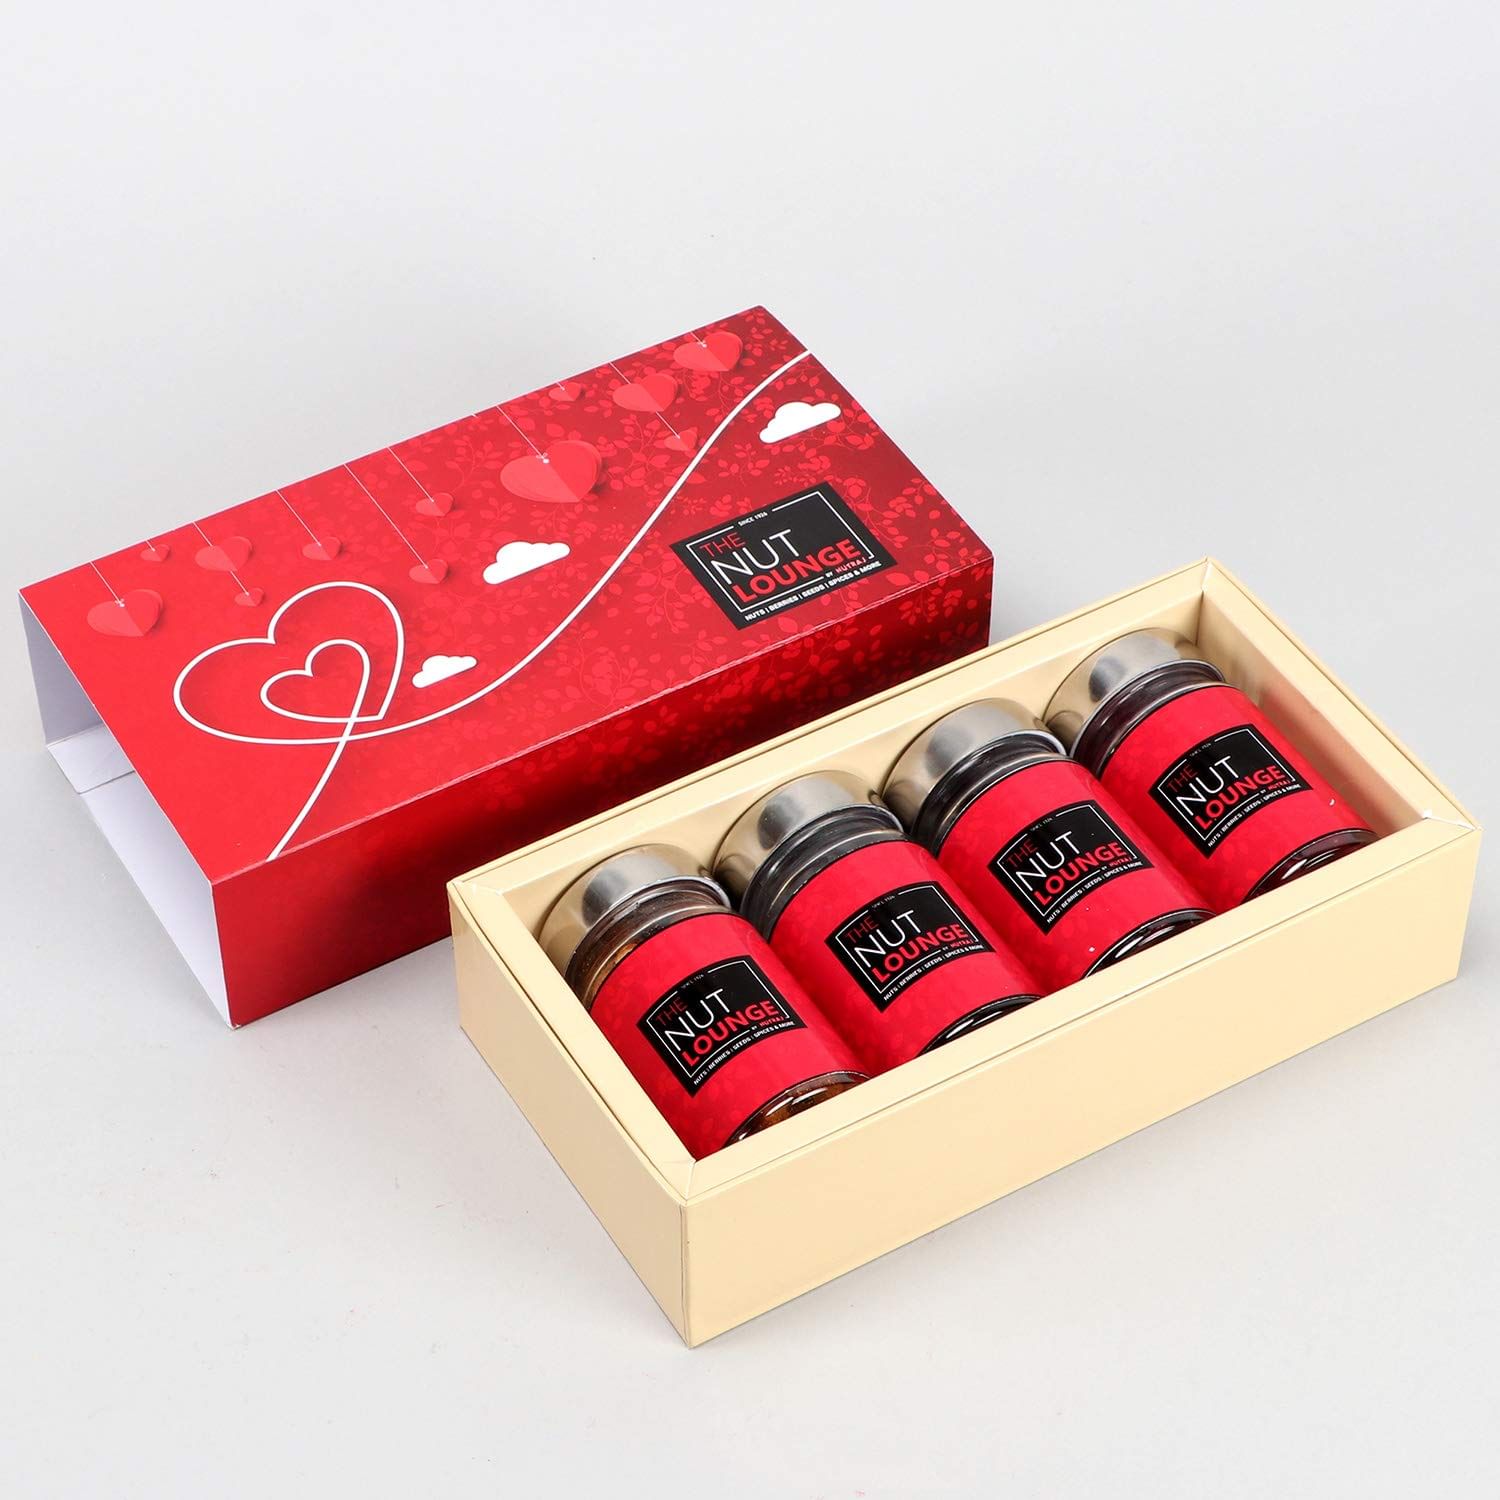 Nut LoungeChocolate Gift Box 400g (Almond Pista, Chickpeas Chocolate, Hazelnut Chocolate, Sliced Cranberry 100g Each)